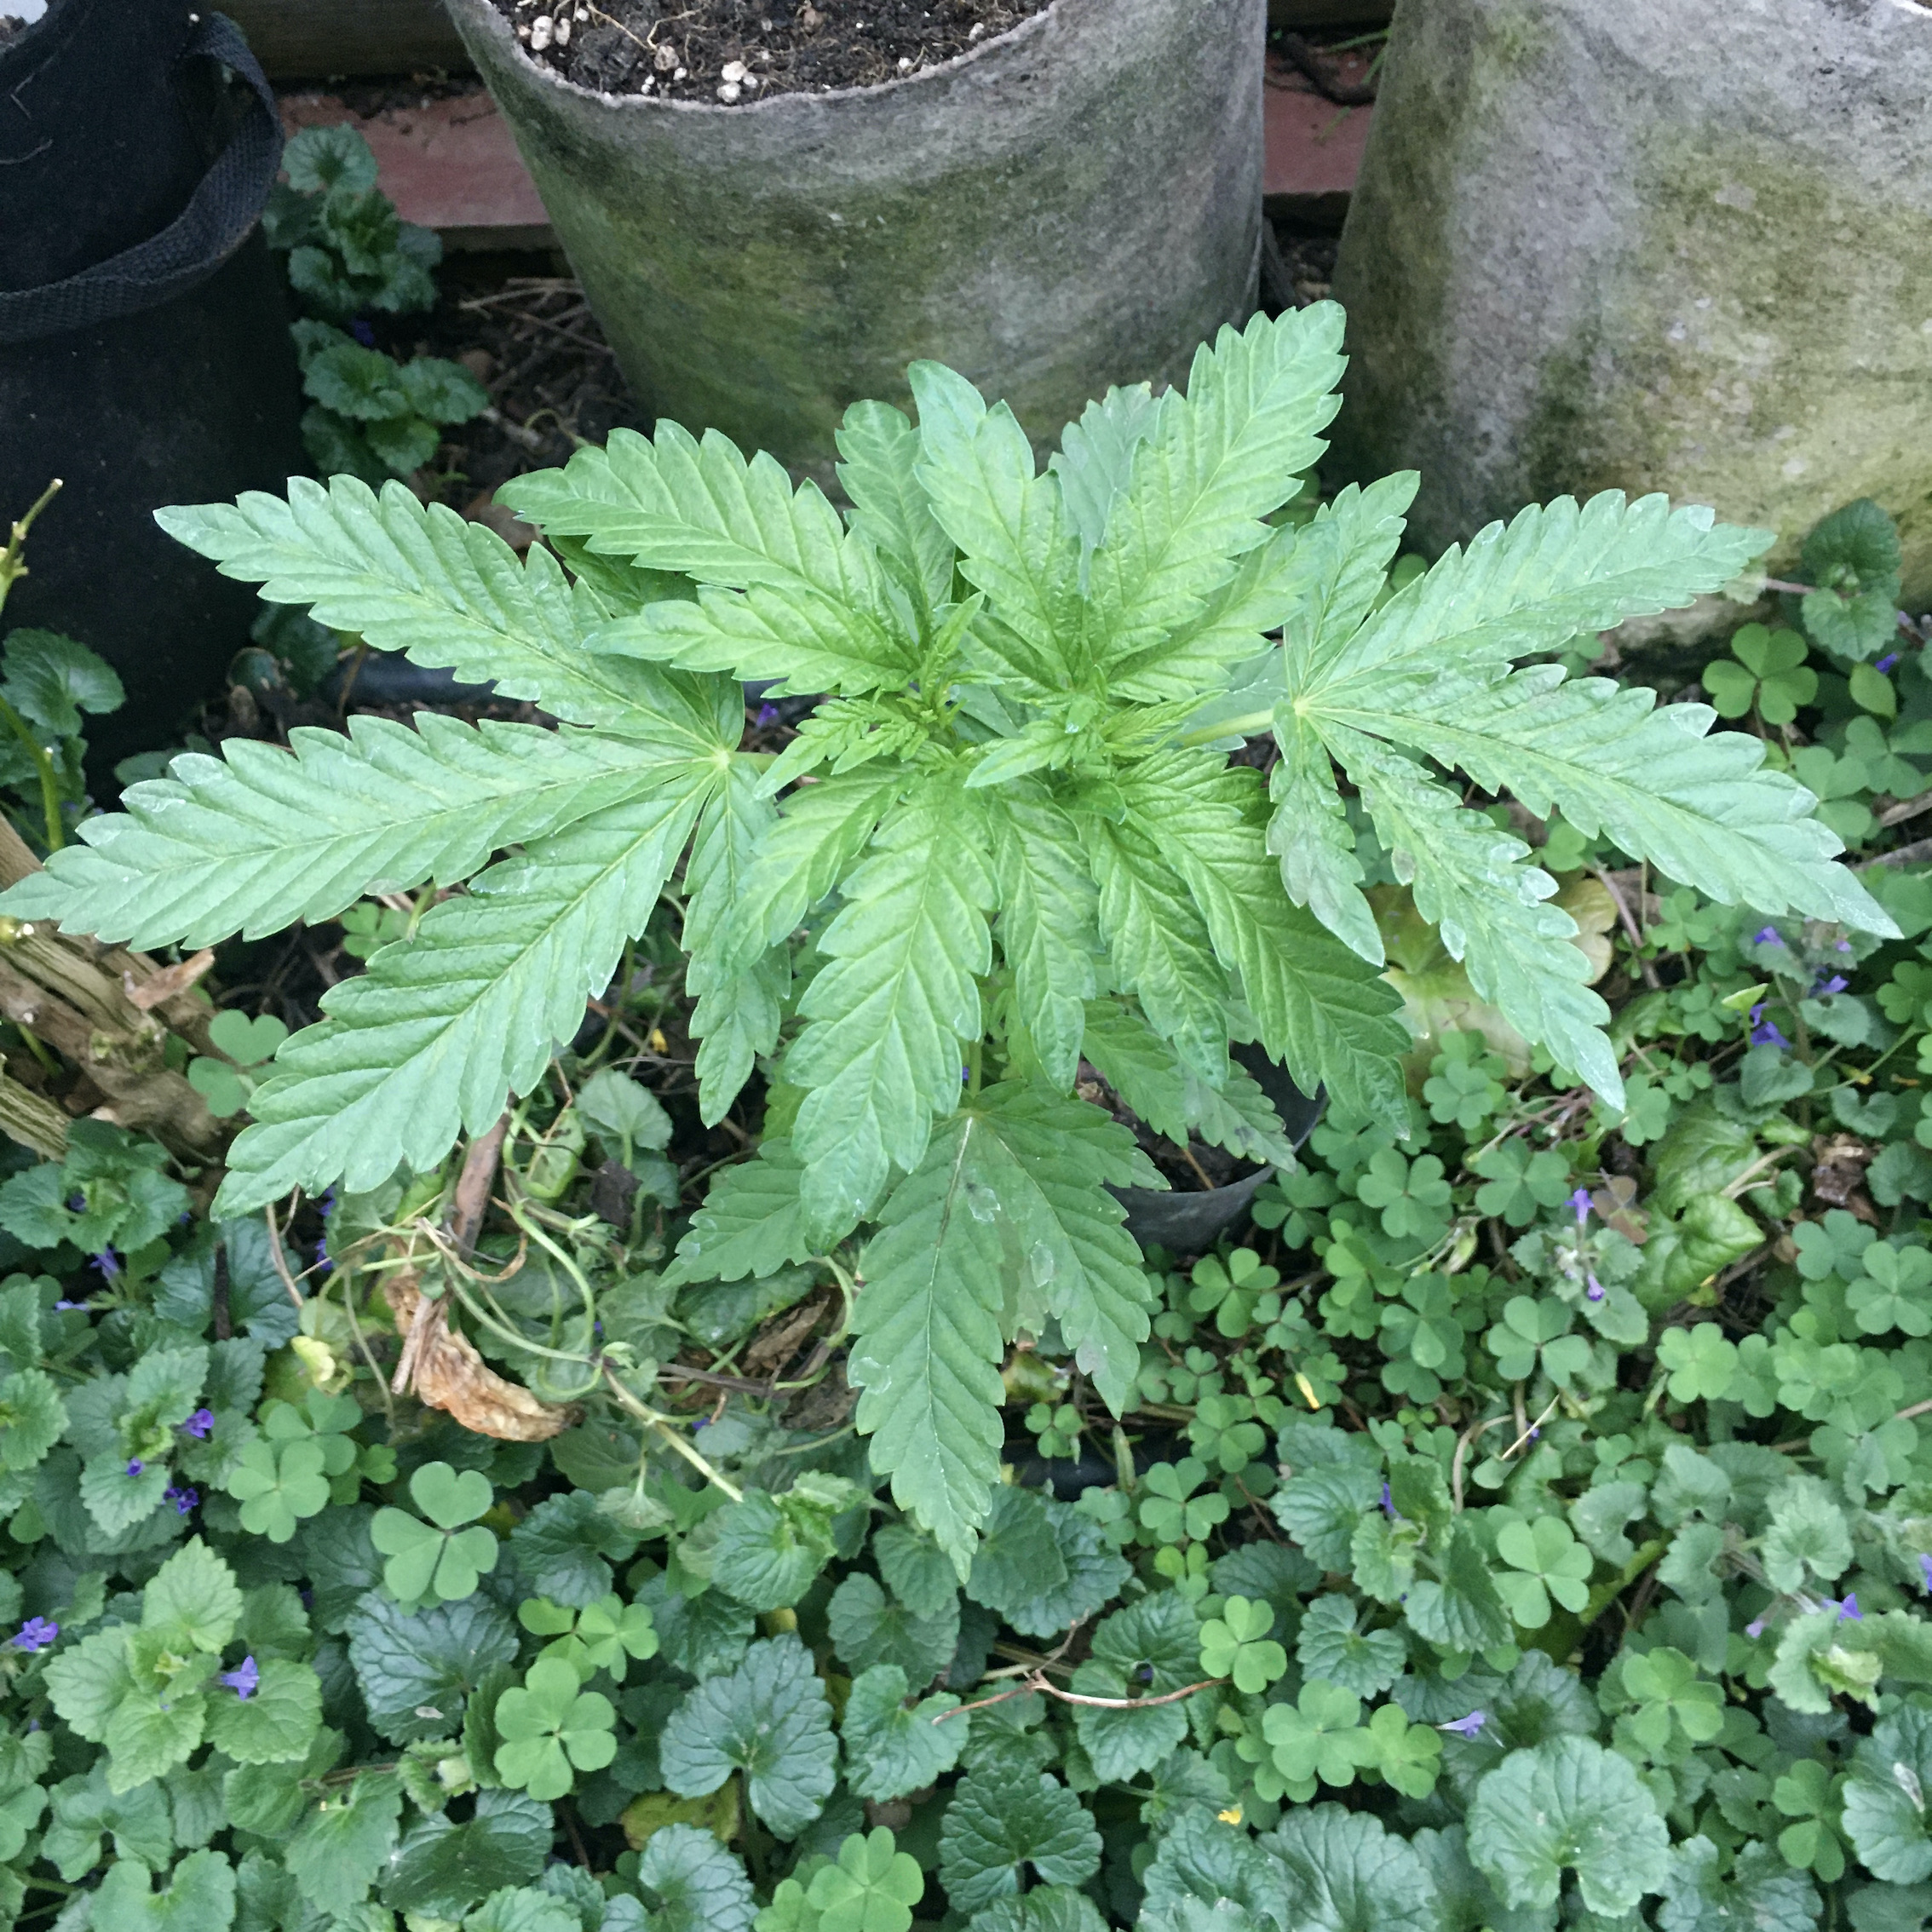 Cover Crops, Green Manure & Mulch for cannabis